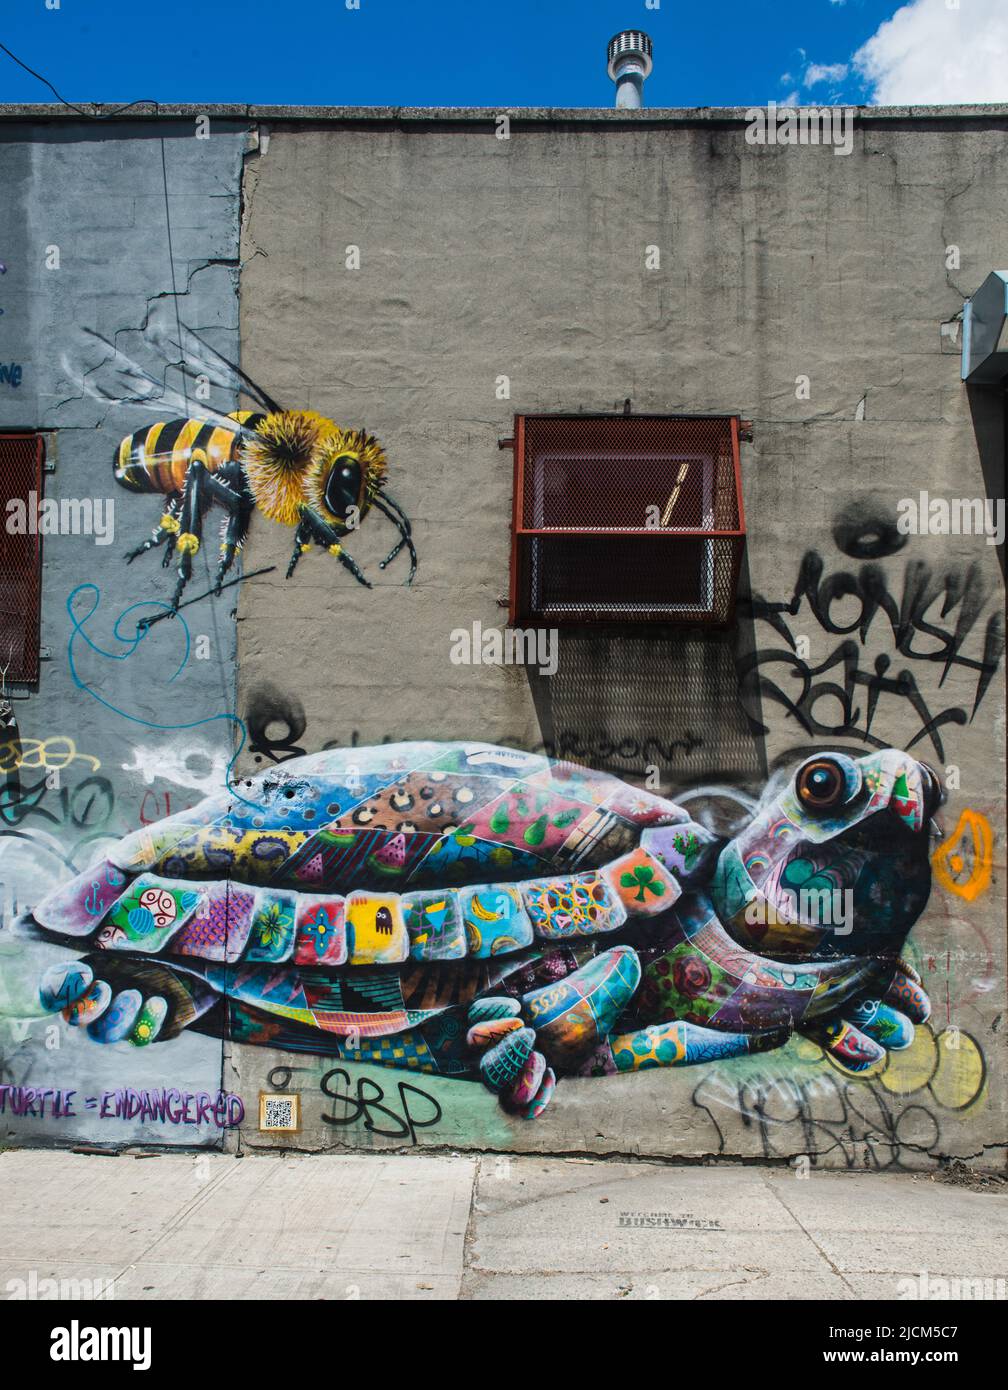 Graffiti mural in Bushwick Brooklyn, New York City Stock Photo